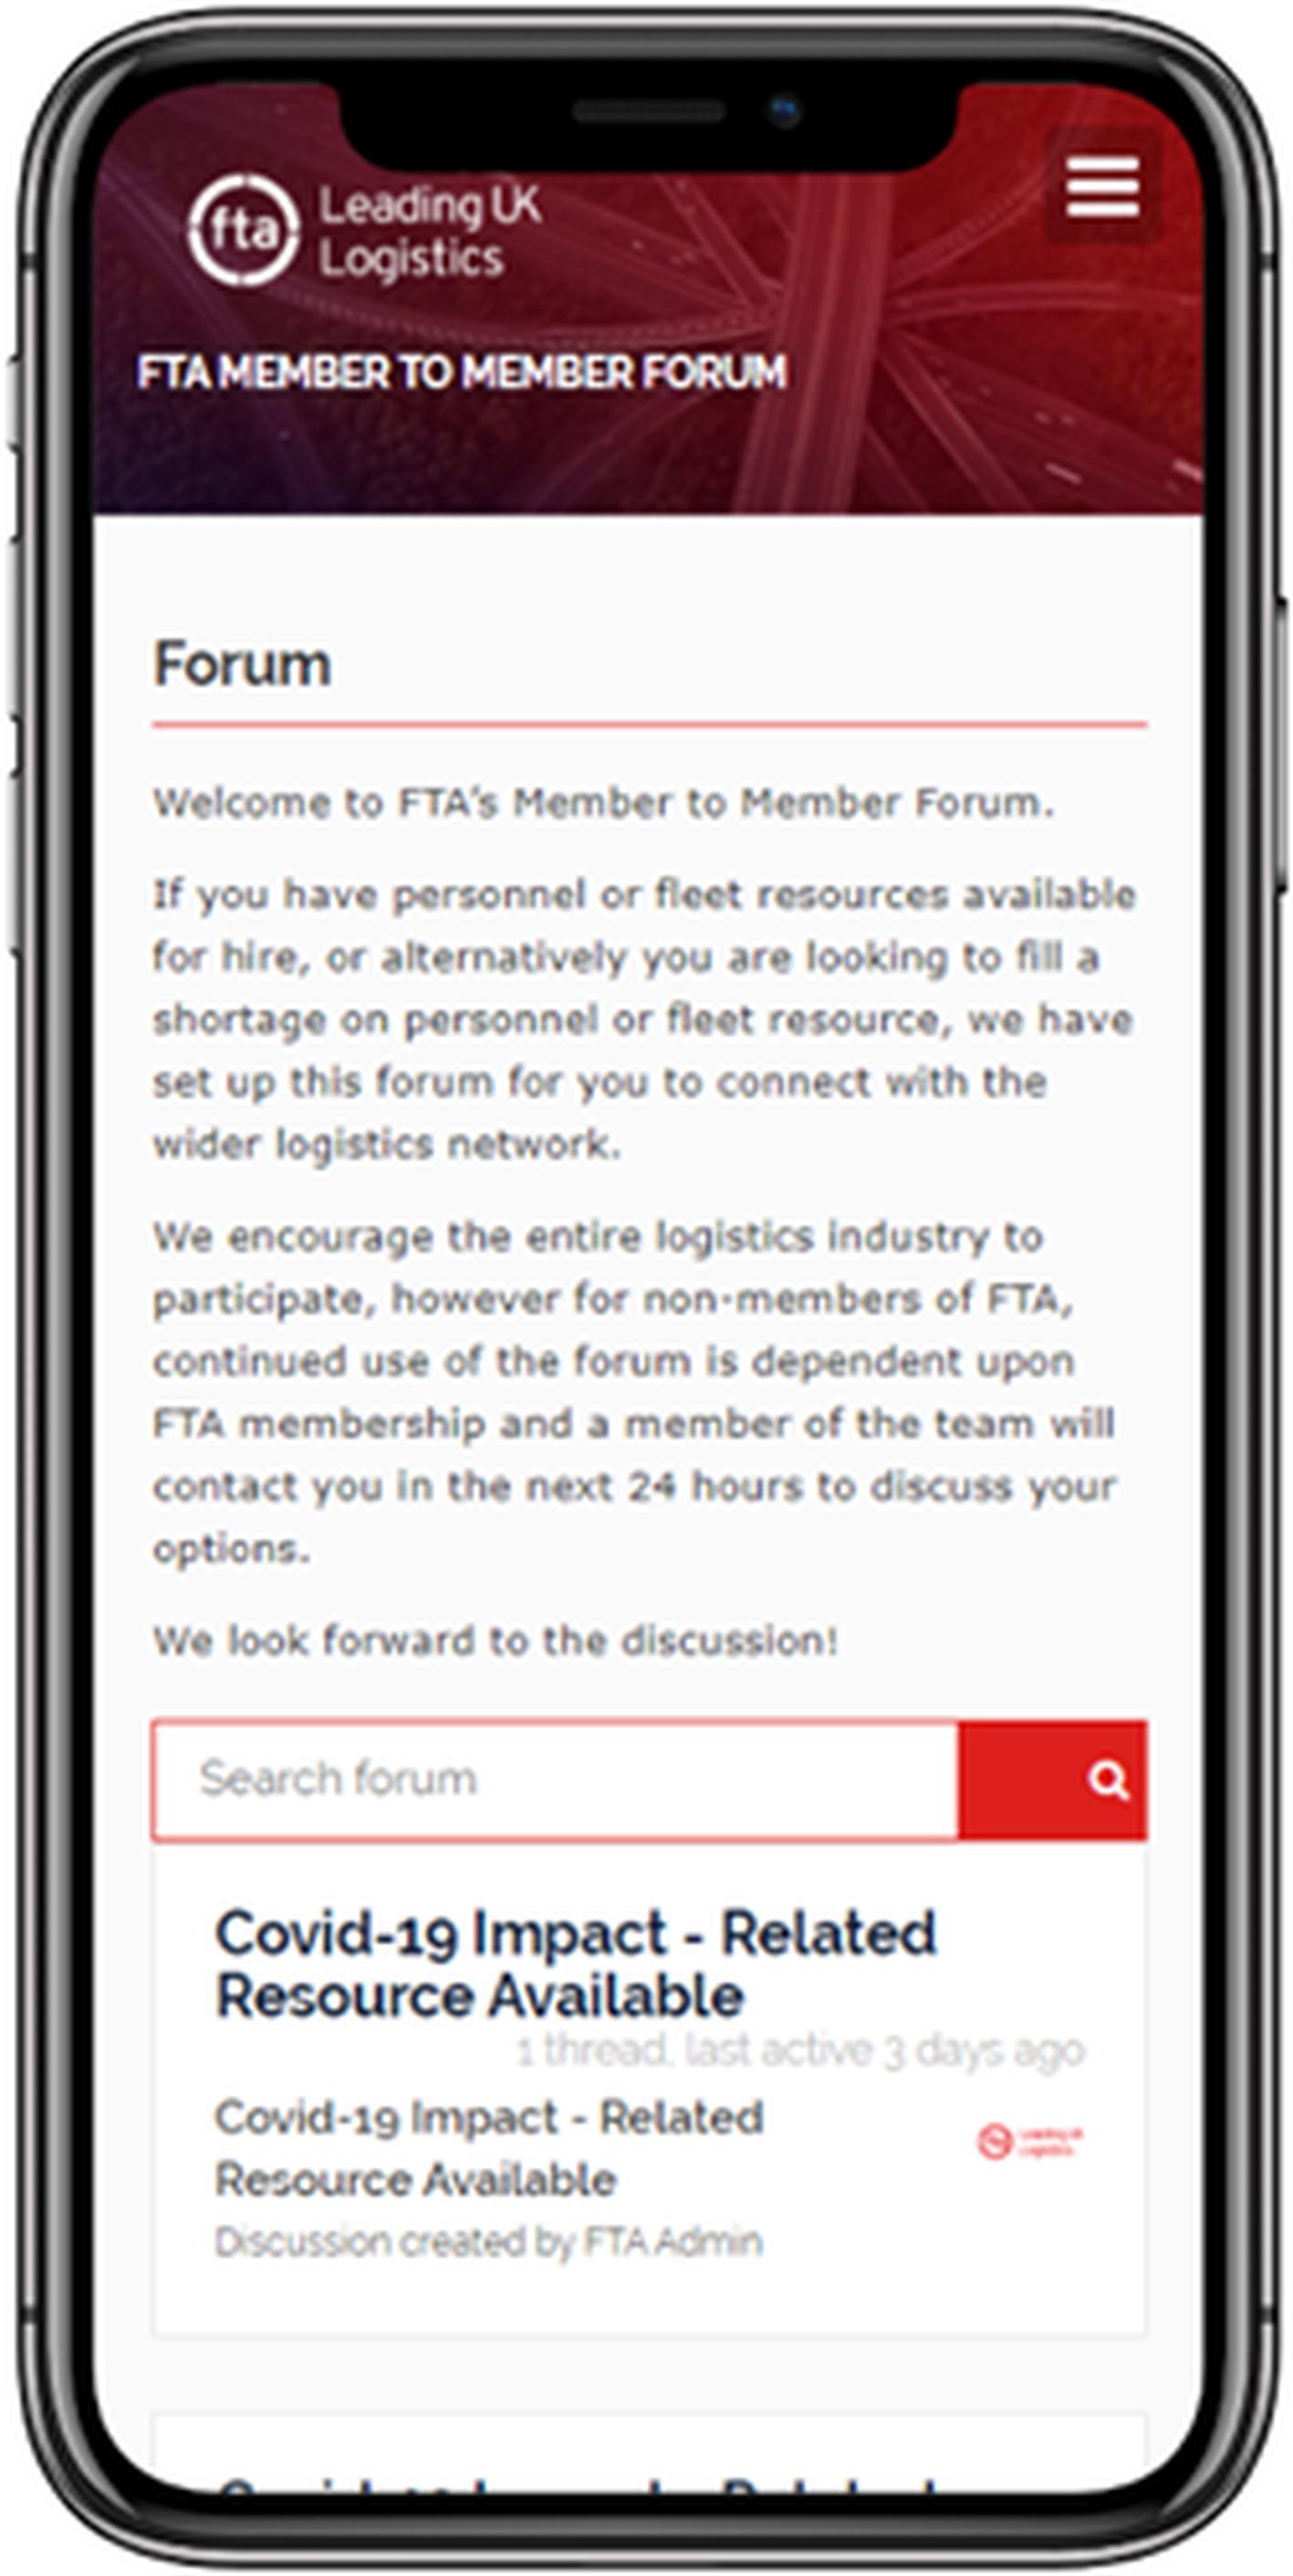 The FTA member portal